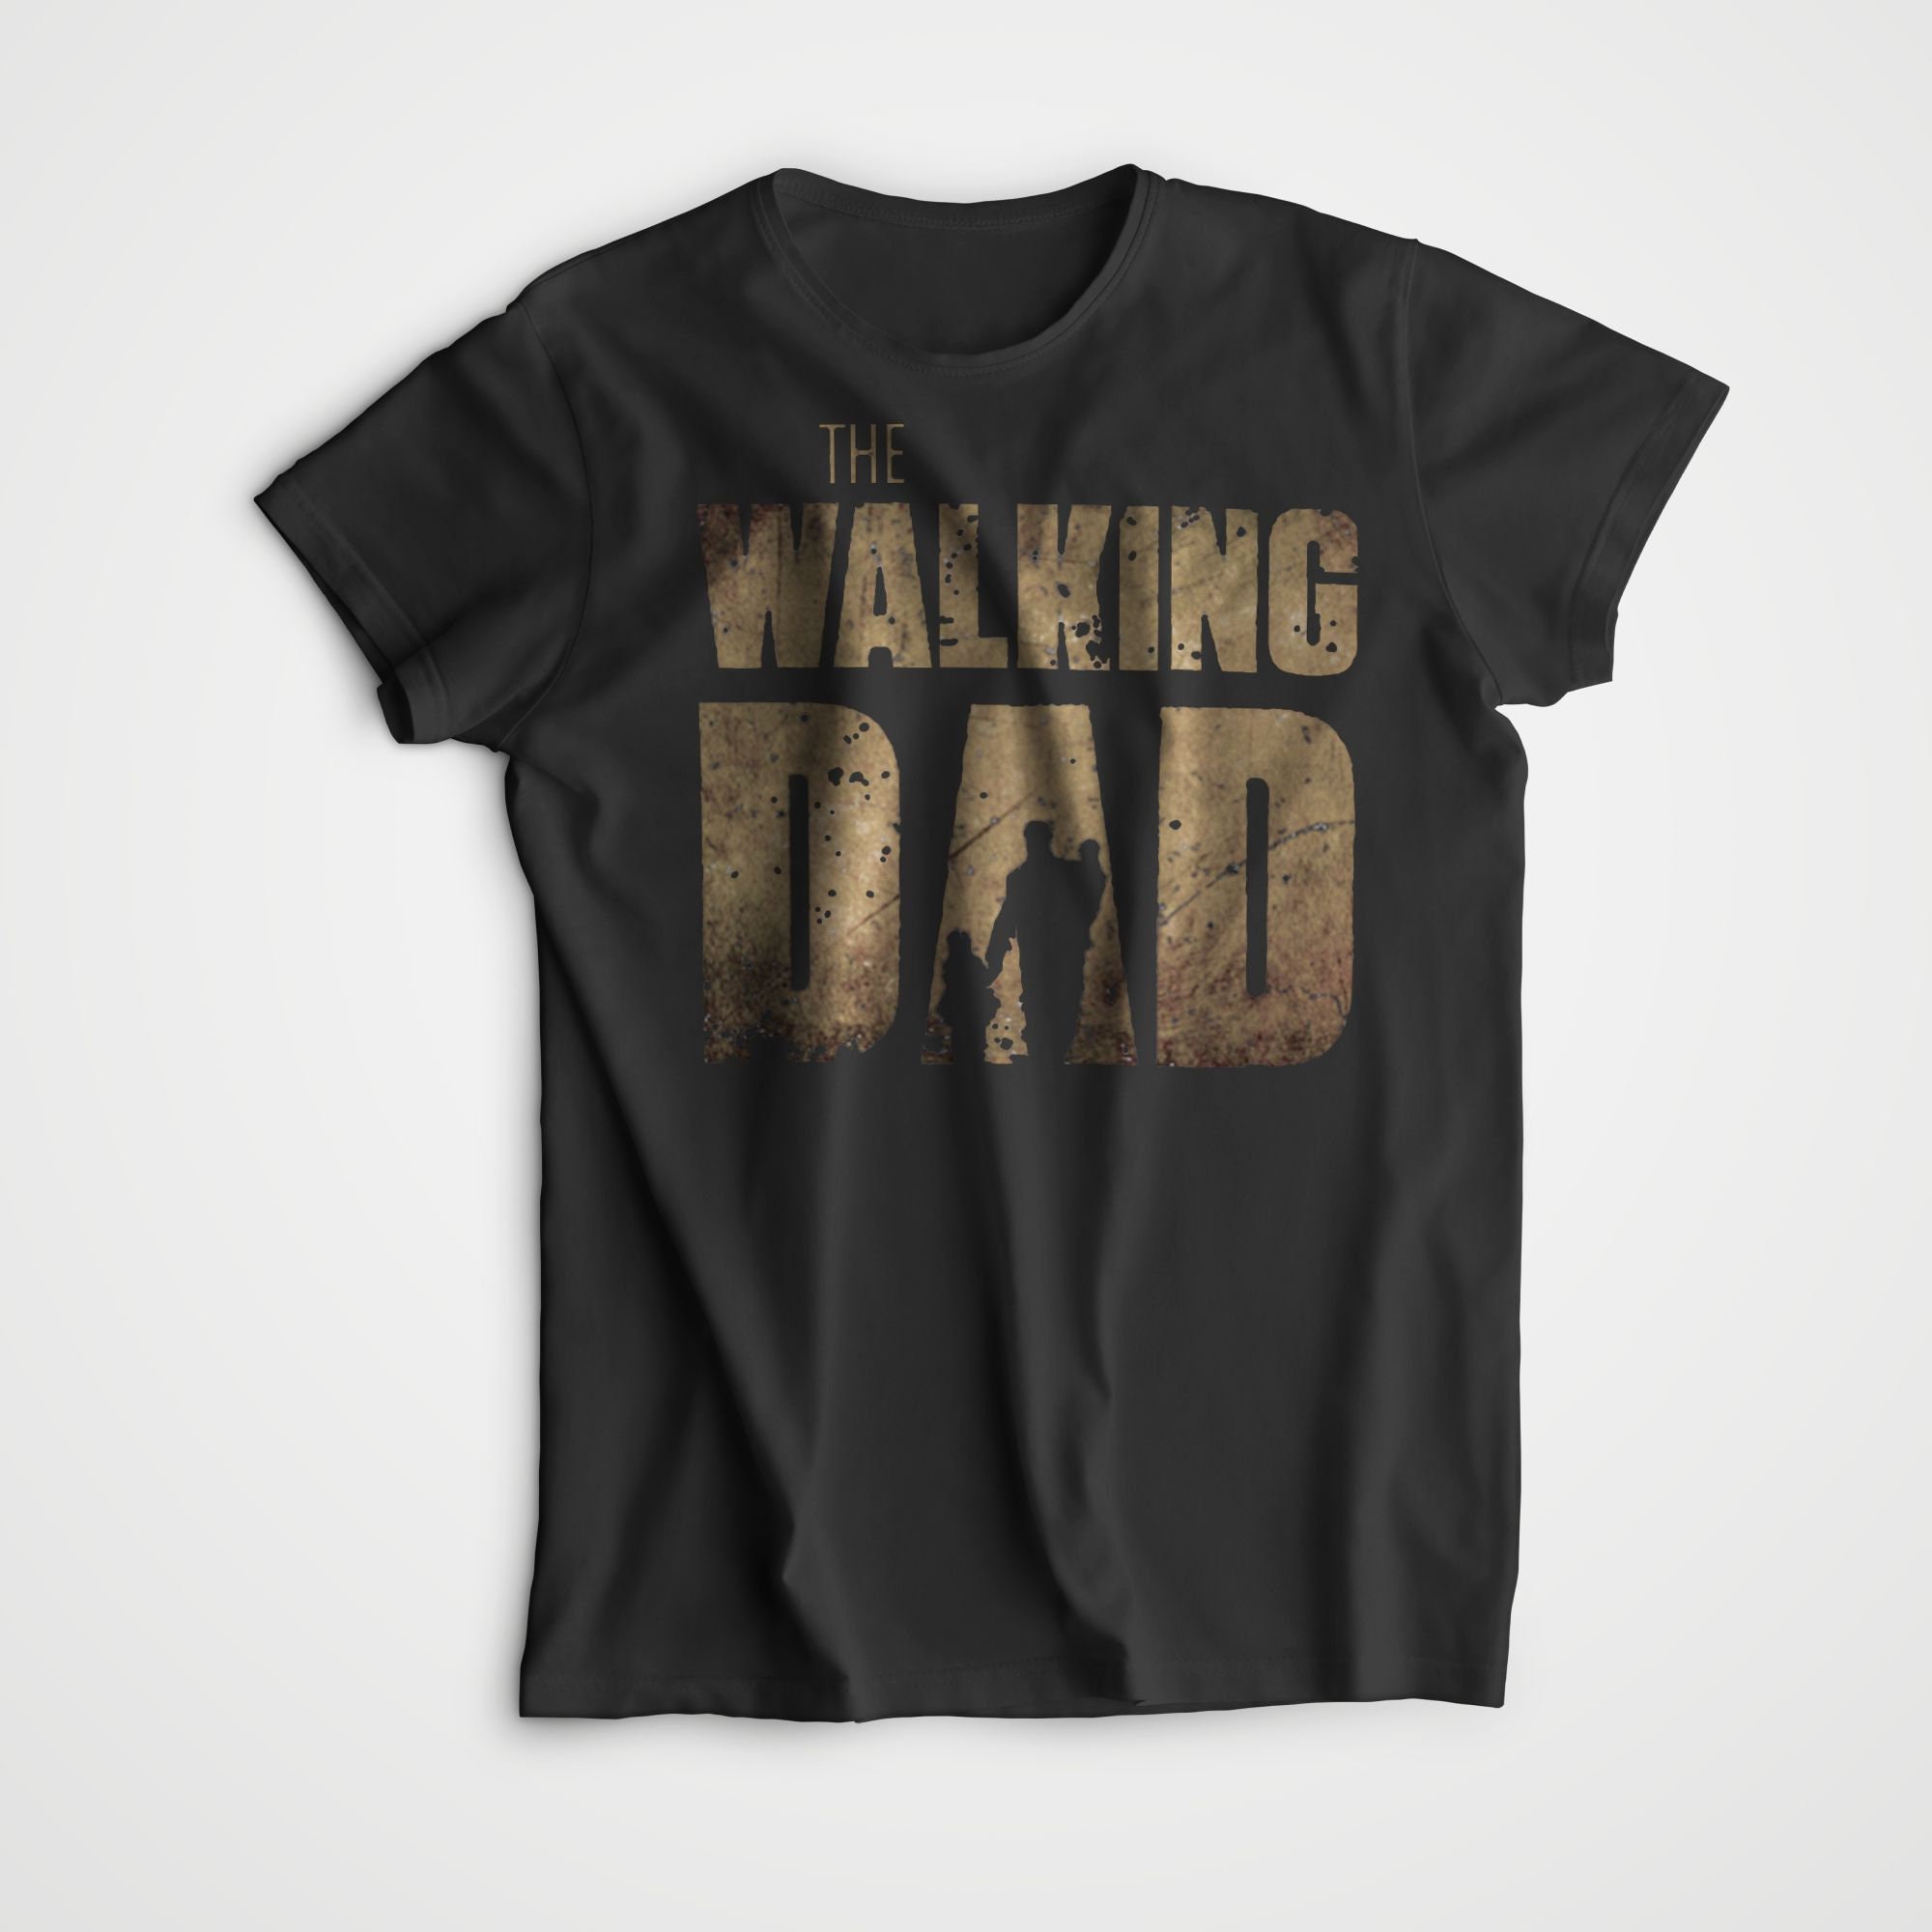 The Walking Dad Mash Up T-Shirt Mens Black Tee Funny Shirt